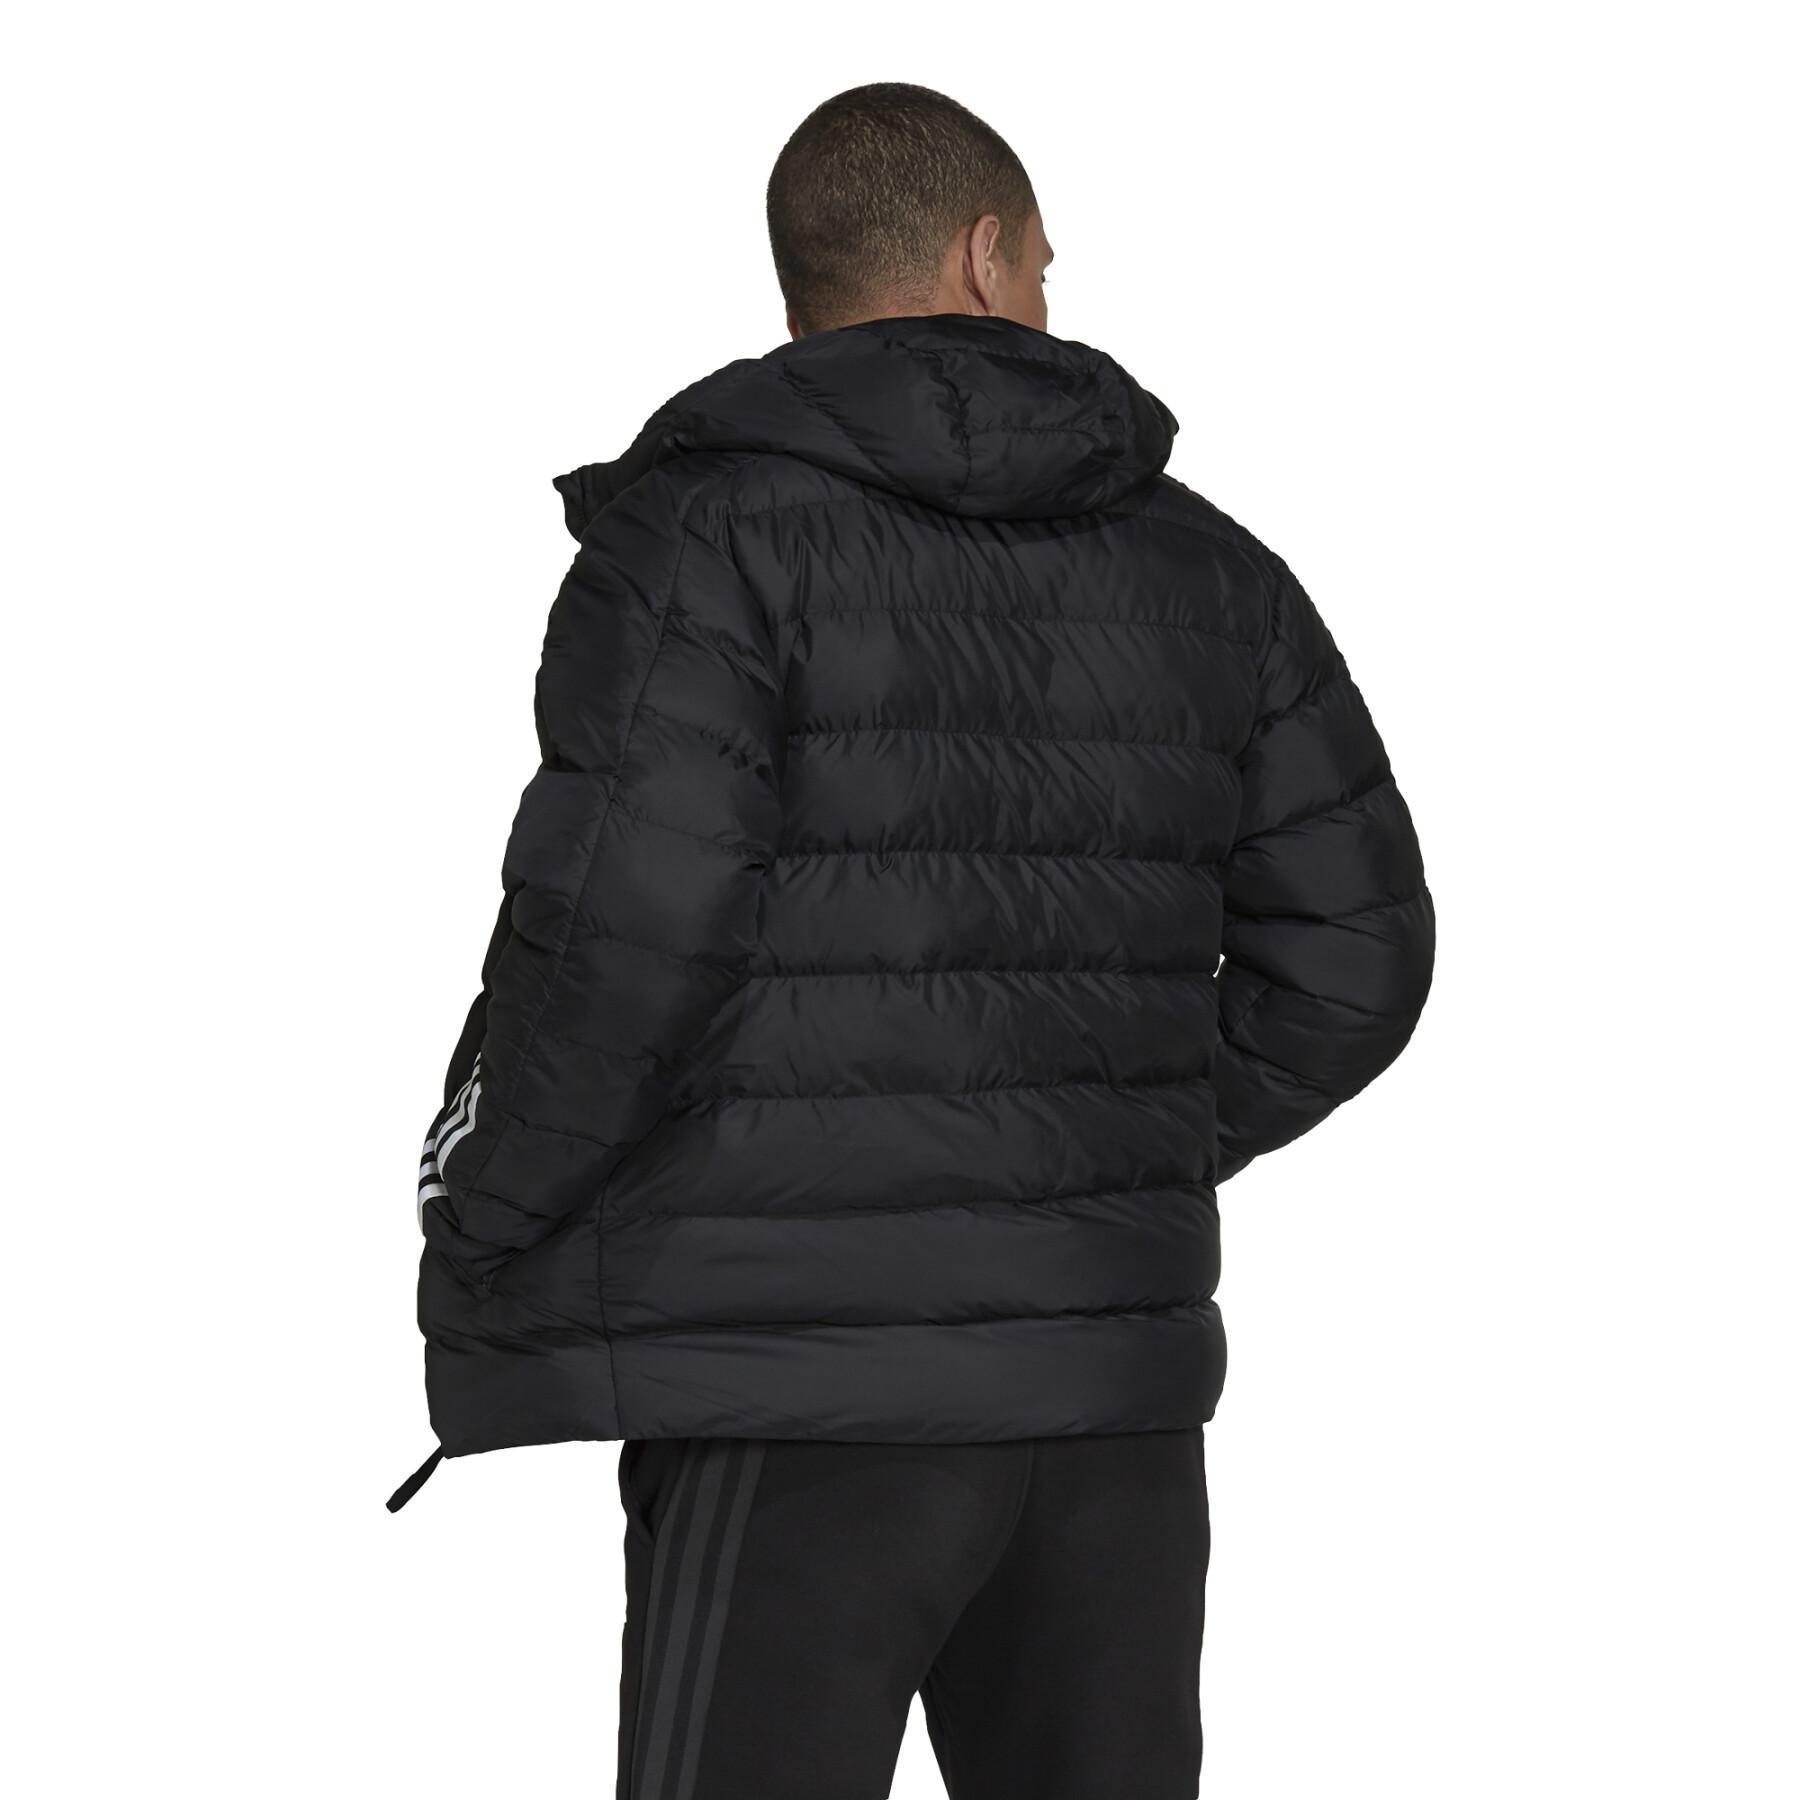 regla hielo Lustre Hooded jacket adidas Itavic 3-Stripes Midweight - adidas - Brands -  Lifestyle